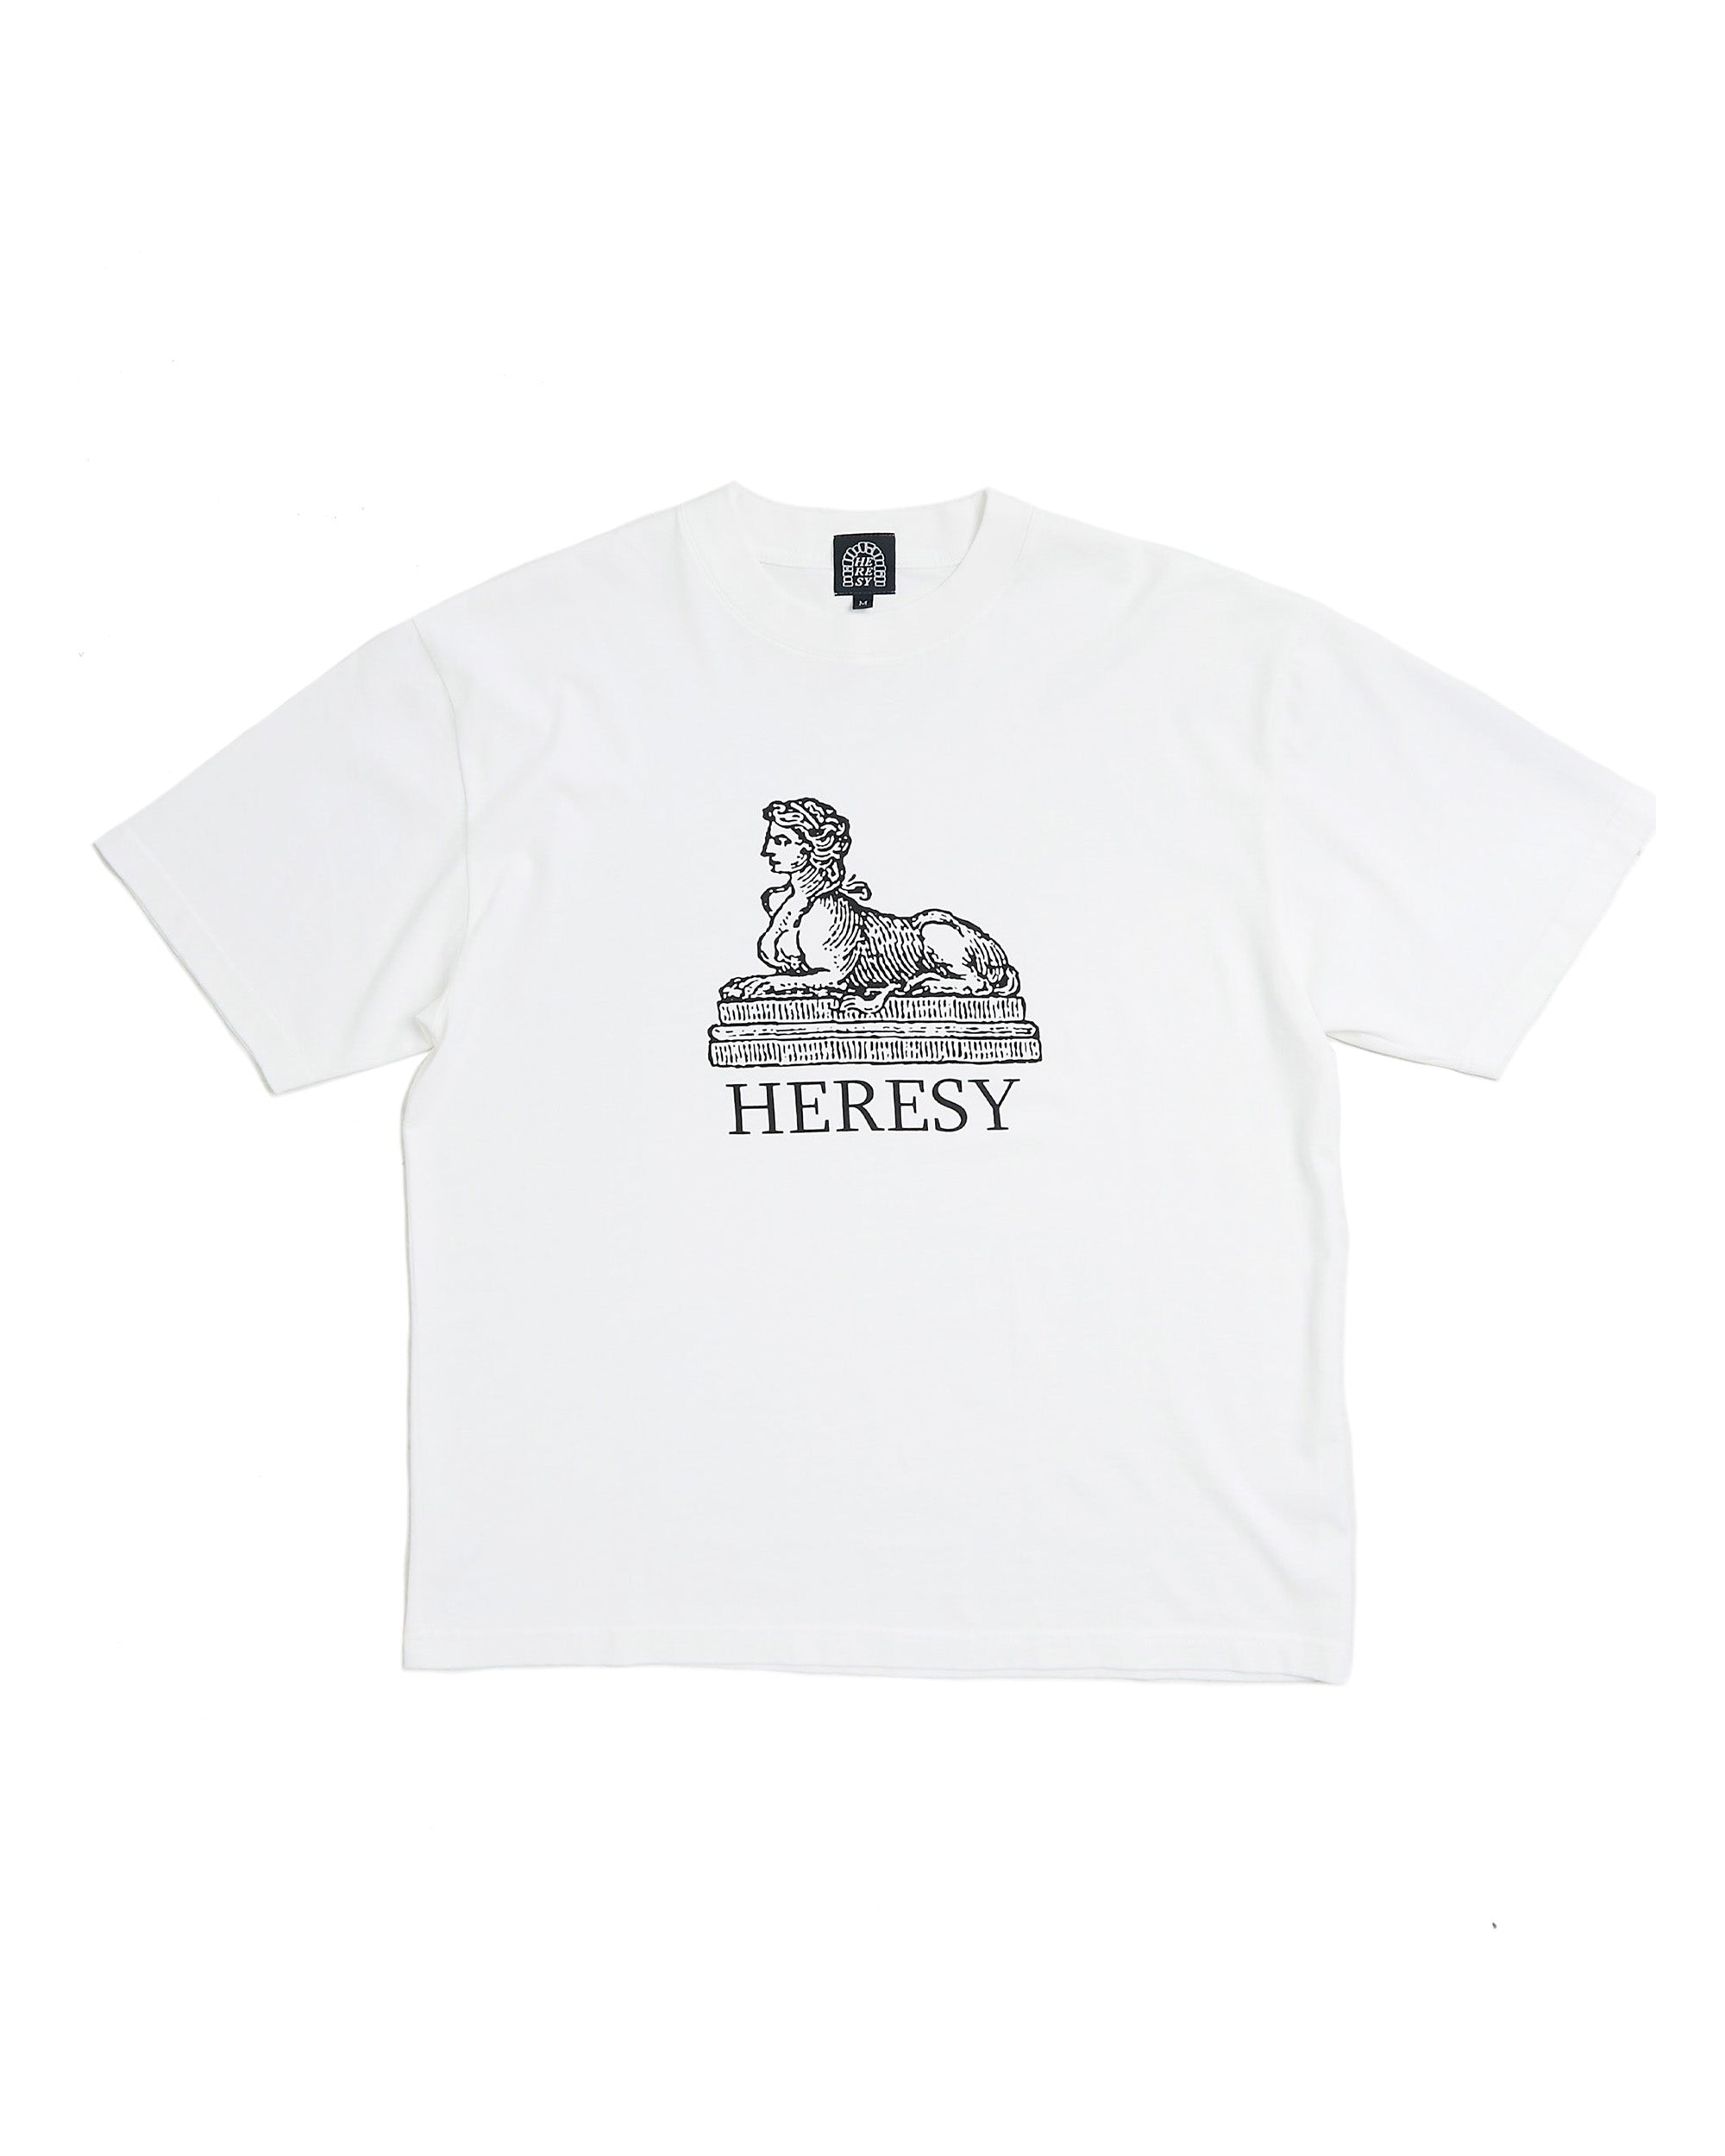 Godhead T-shirt - White